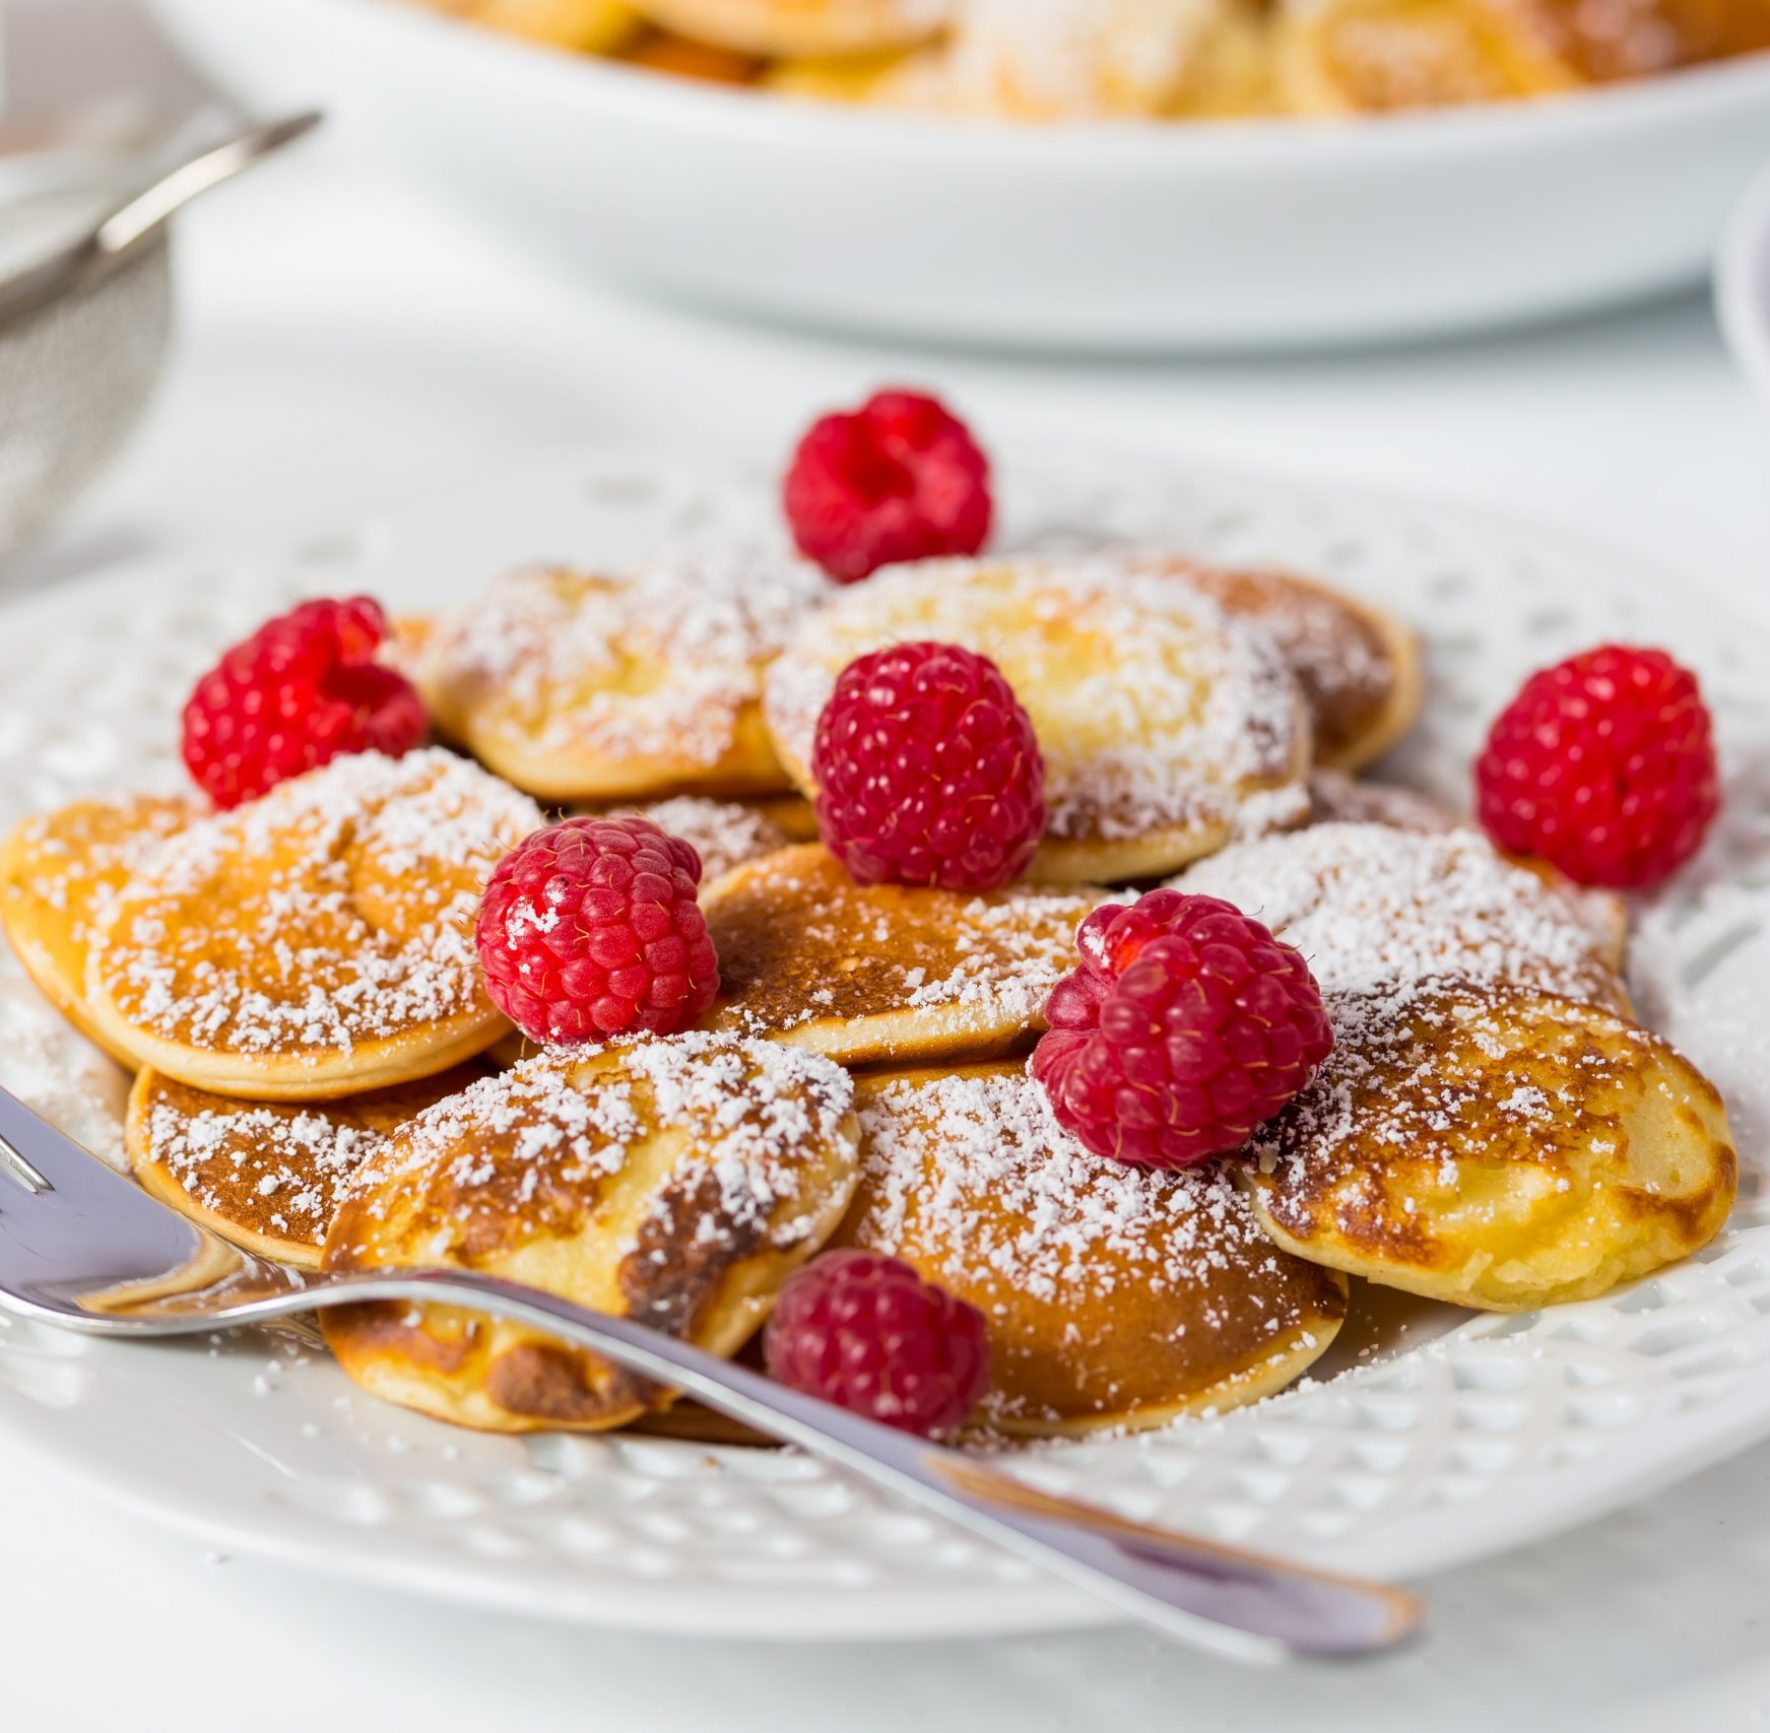 Poffertjes - small Dutch pancakes with fresh raspberries. Traditional Dutch cuisine.